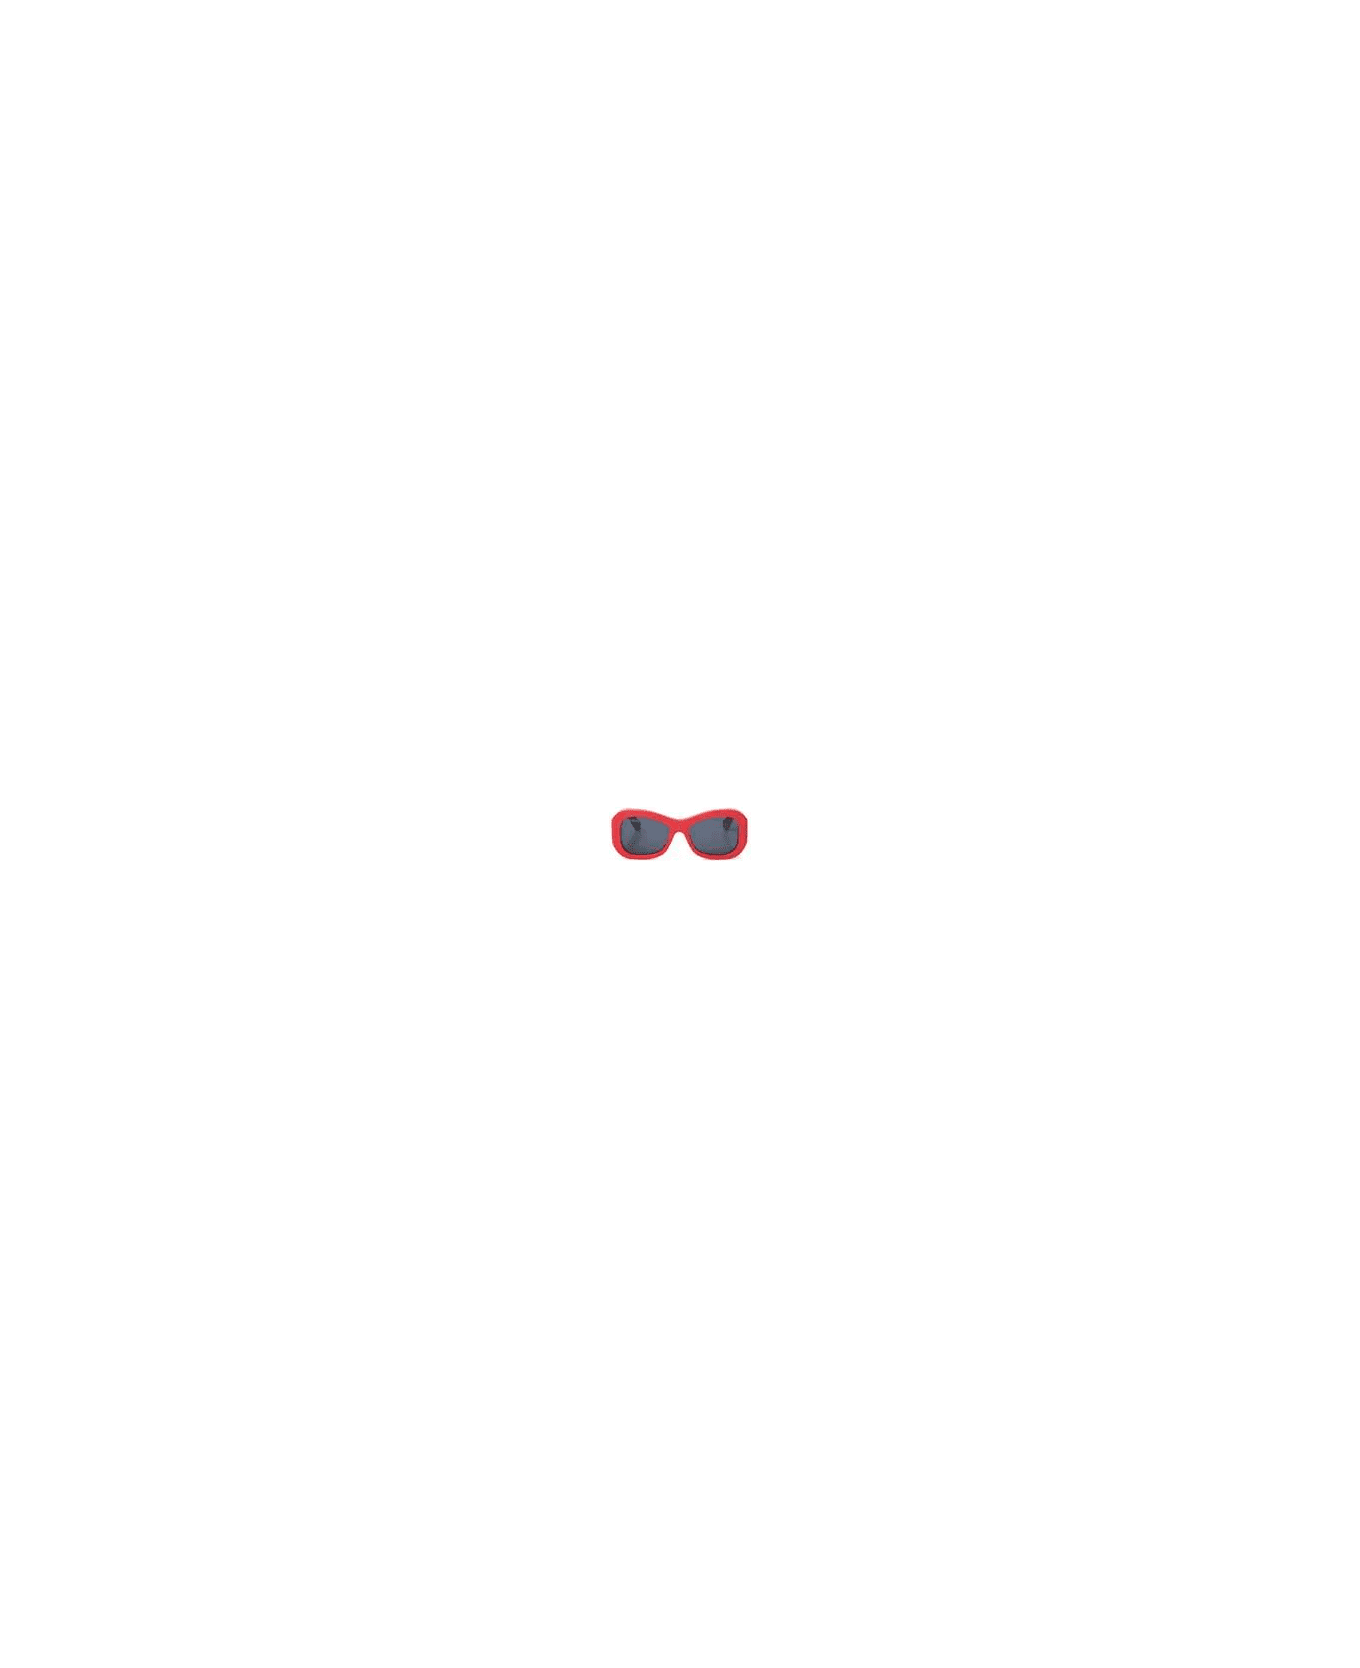 Off-White AF PABLO SUNGLASSES RED DARK G Sunglasses - Red サングラス